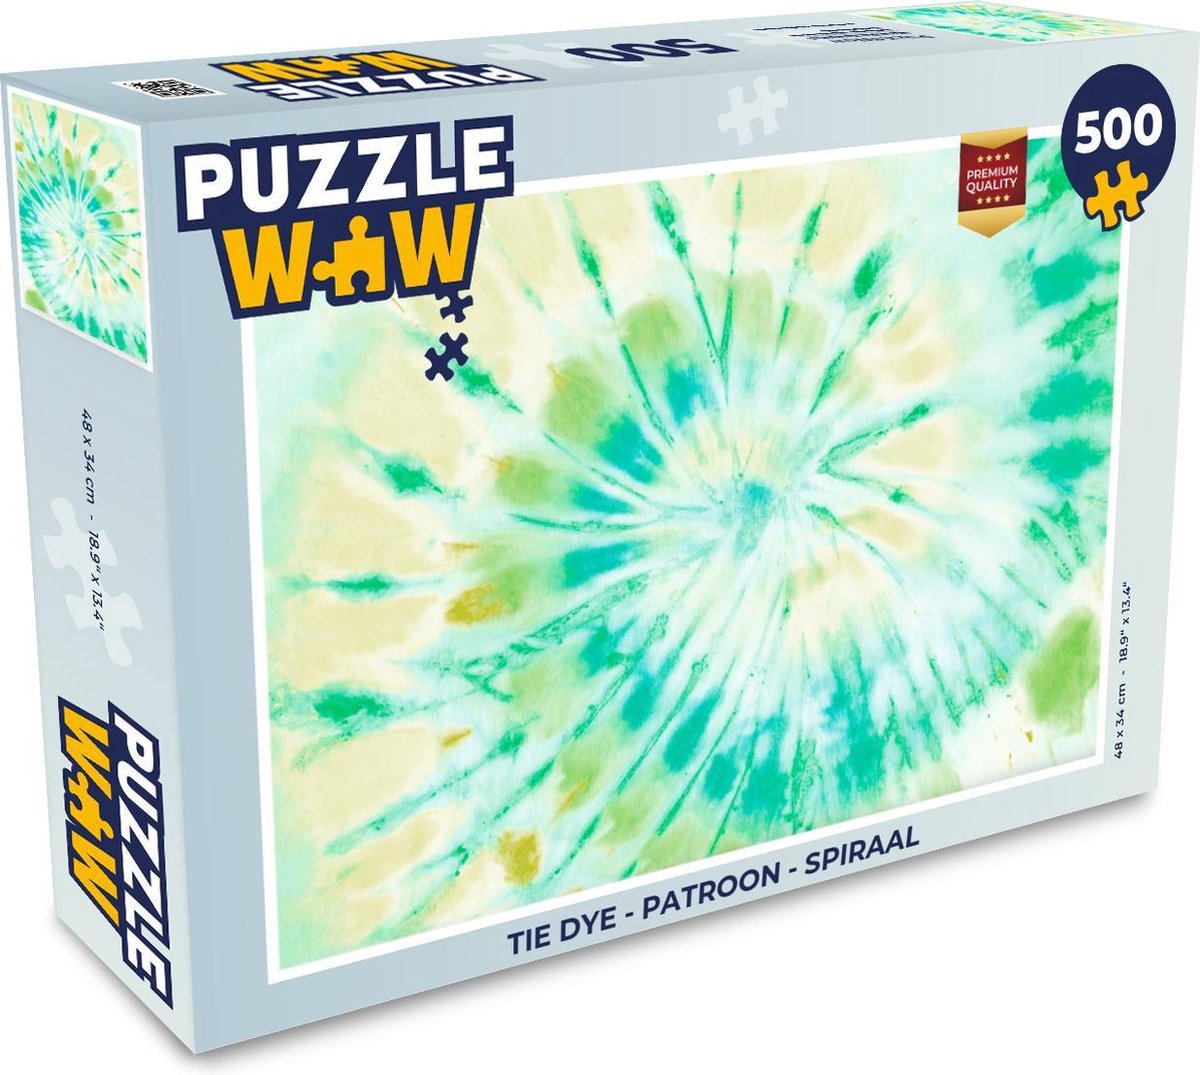 Afbeelding van product PuzzleWow  Puzzel Tie dye - Patroon - Spiraal - Legpuzzel - Puzzel 500 stukjes